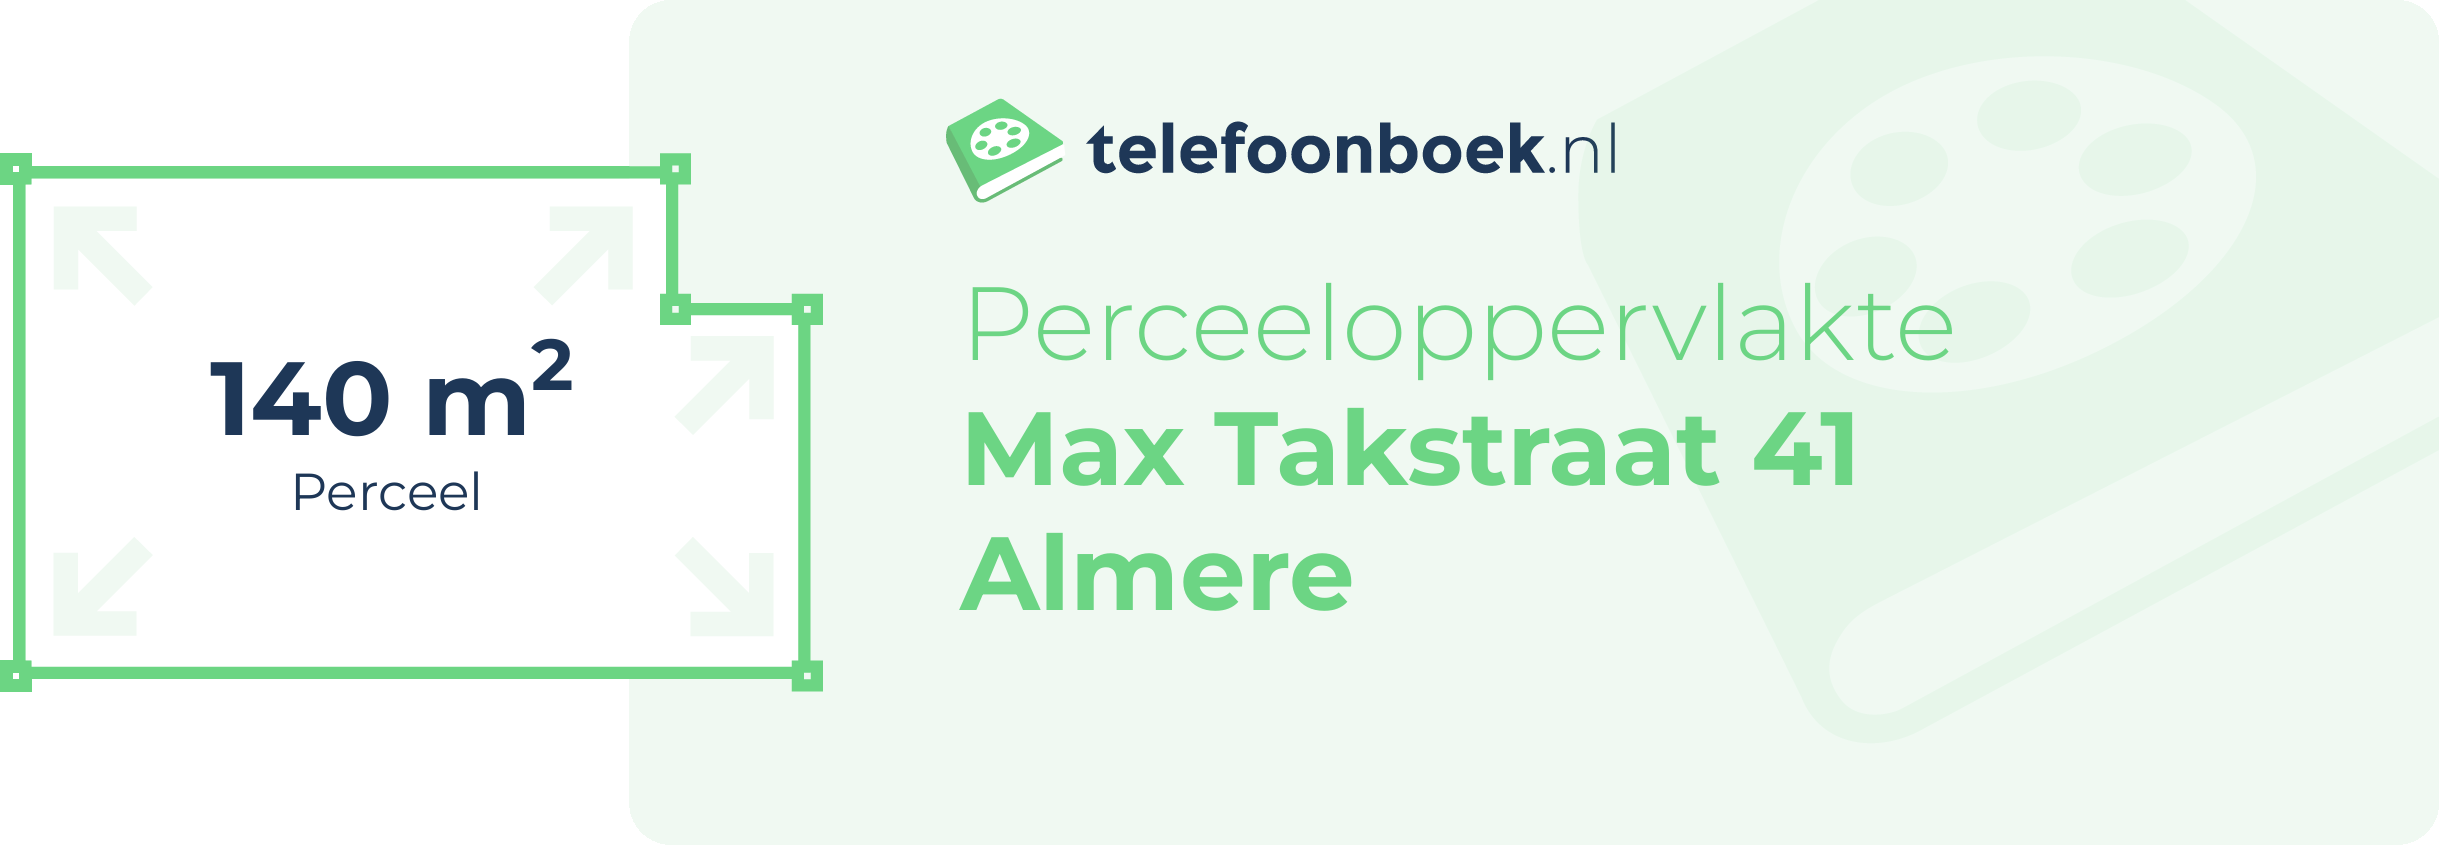 Perceeloppervlakte Max Takstraat 41 Almere